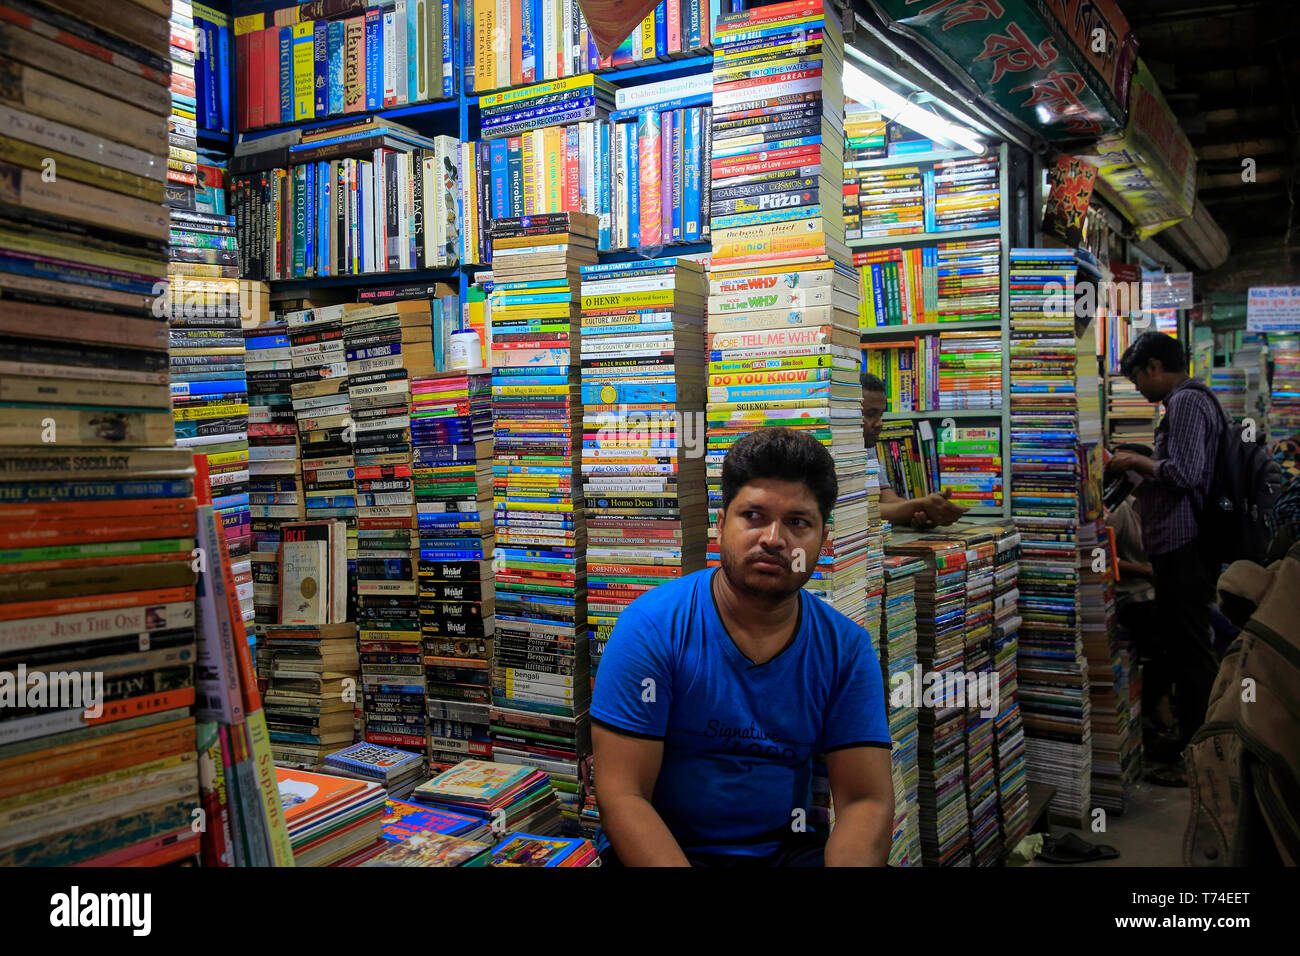 Bookshops at Nilkhet book market, Dhaka, Bangladesh. Stock Photo